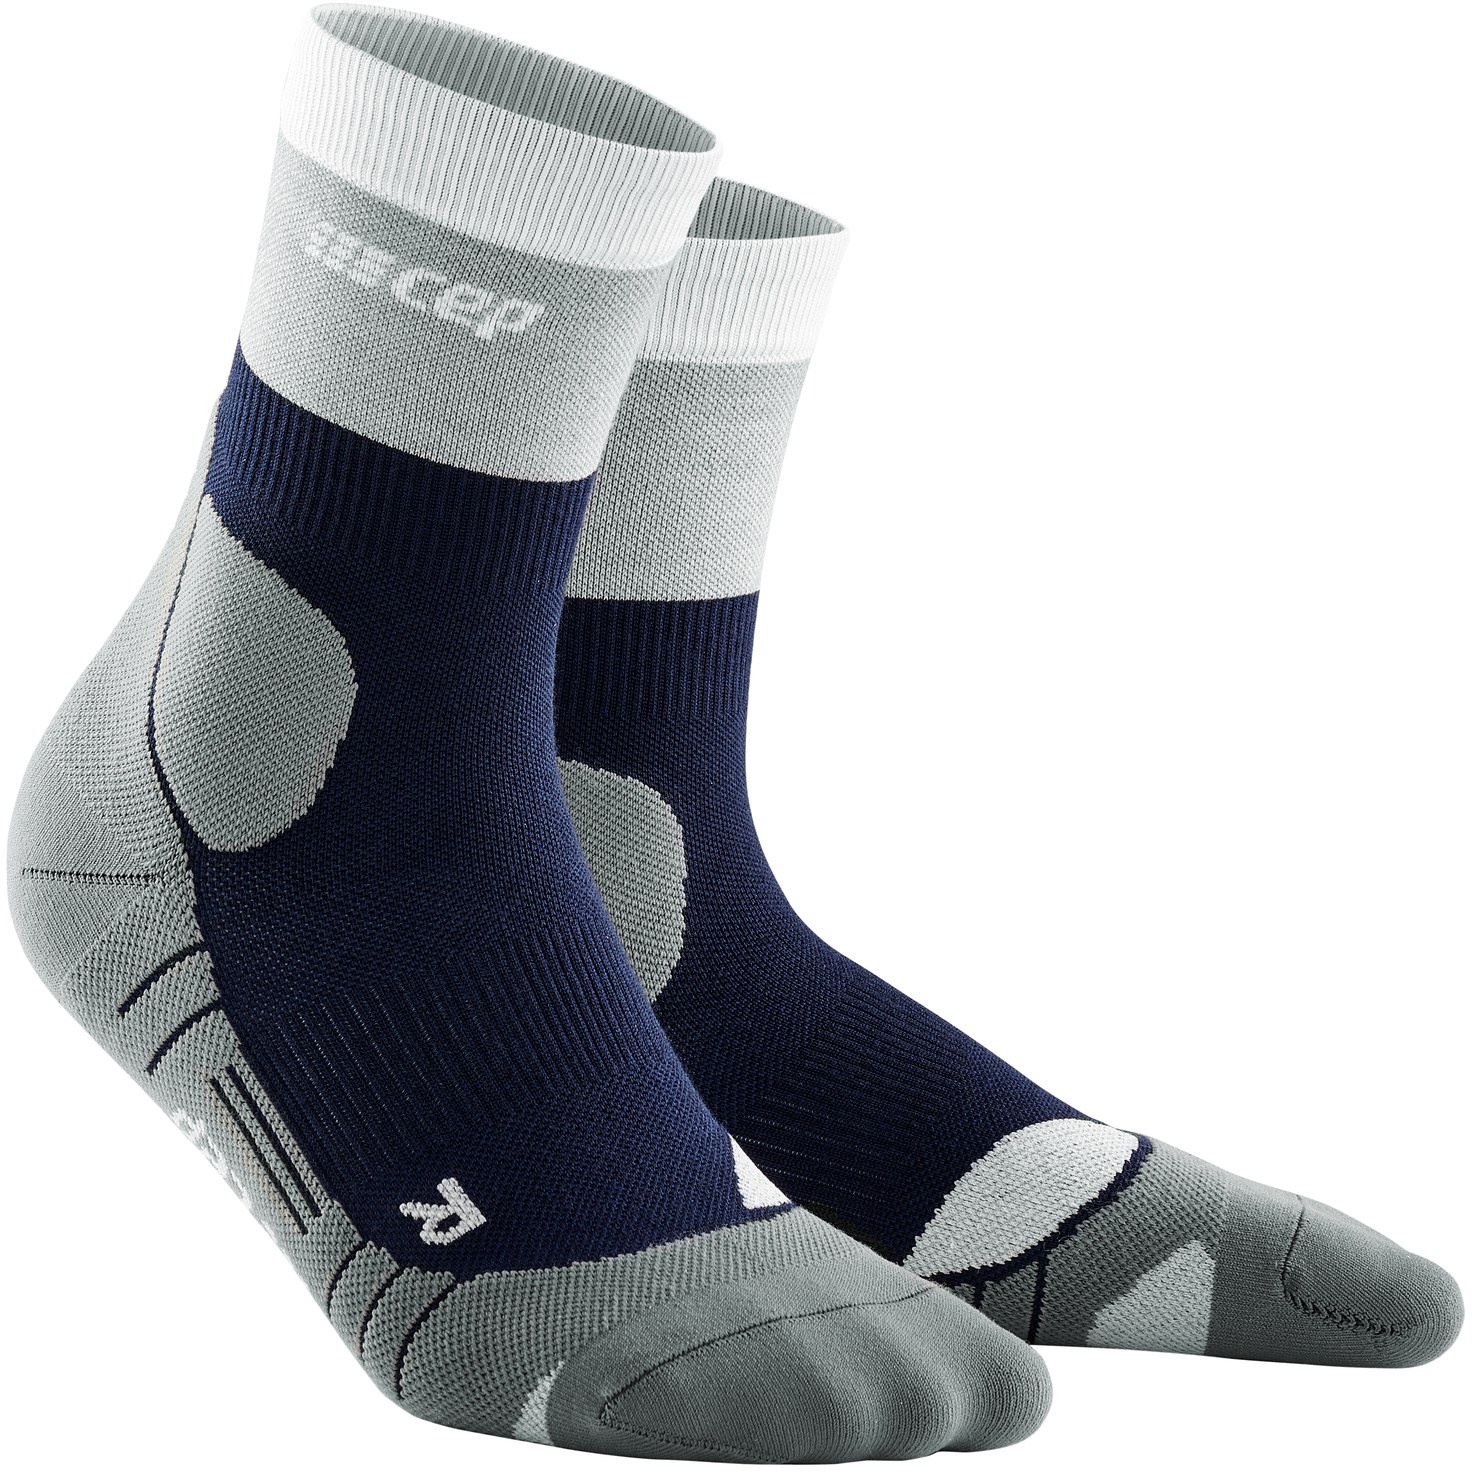 Image of CEP Hiking Light Merino Mid Cut Compression Socks - marineblue/grey